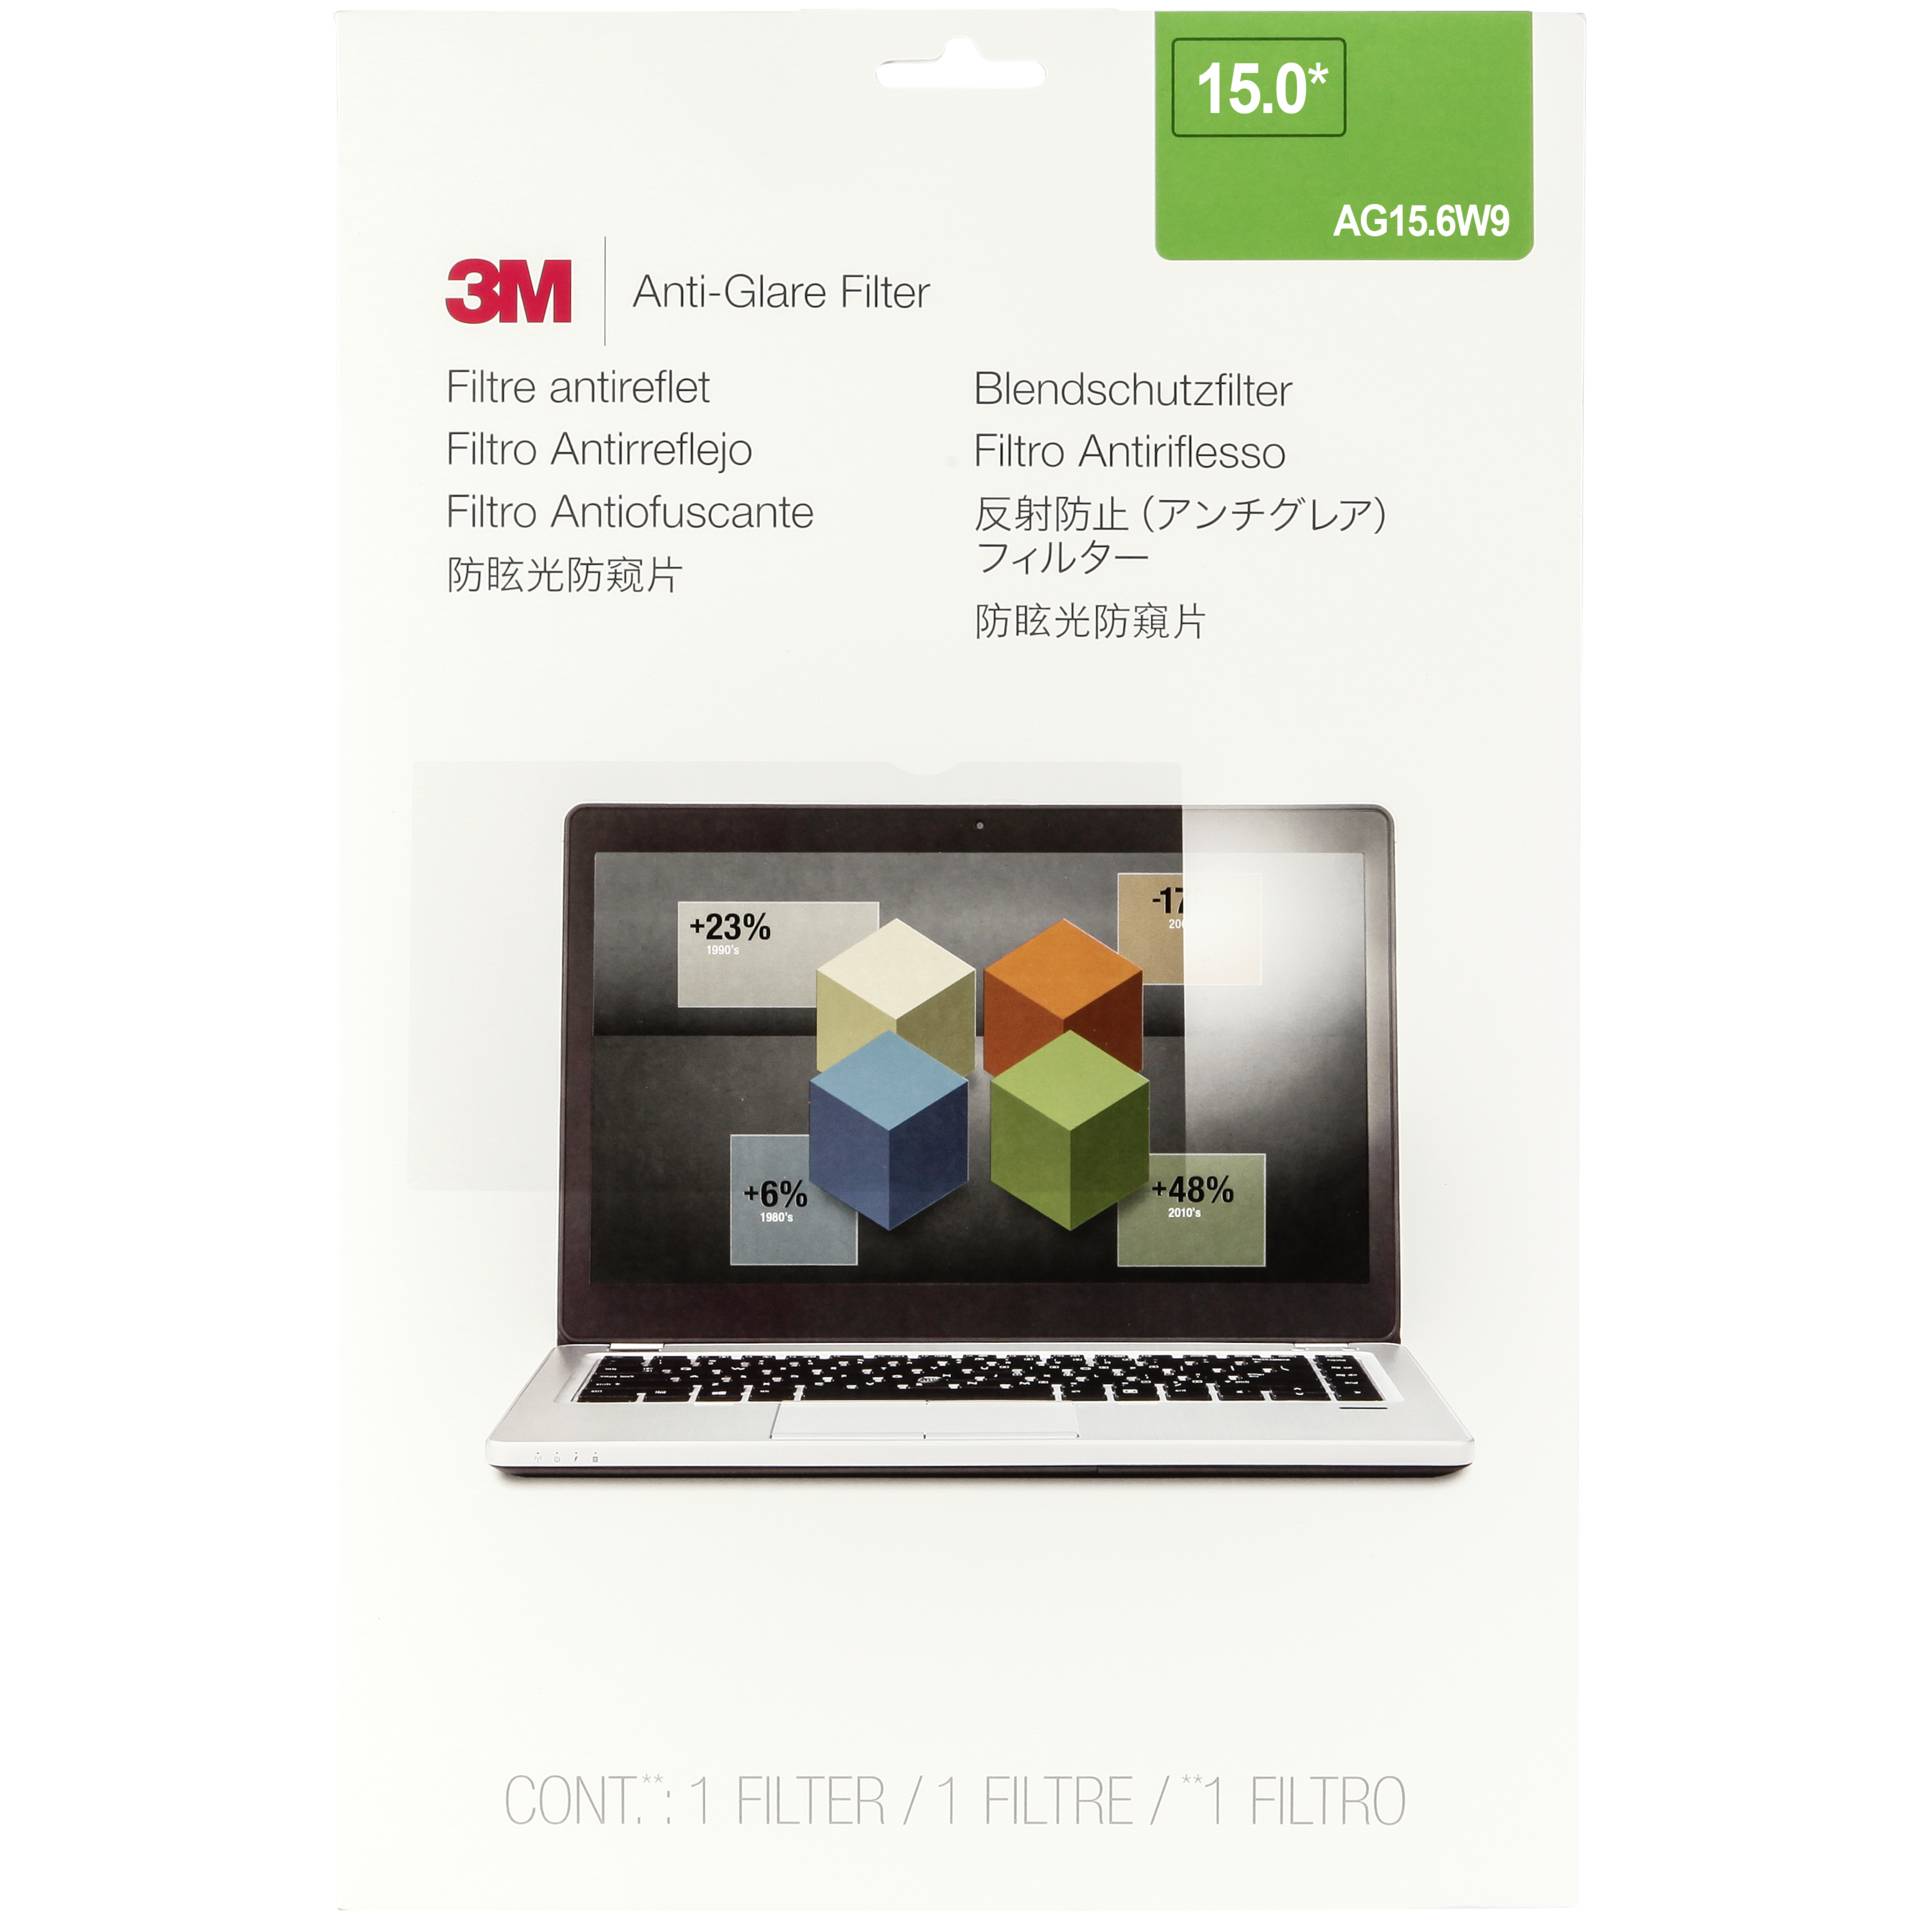 3M AG156W9 Filtro antiriflesso per Widescreen Laptops 15,6